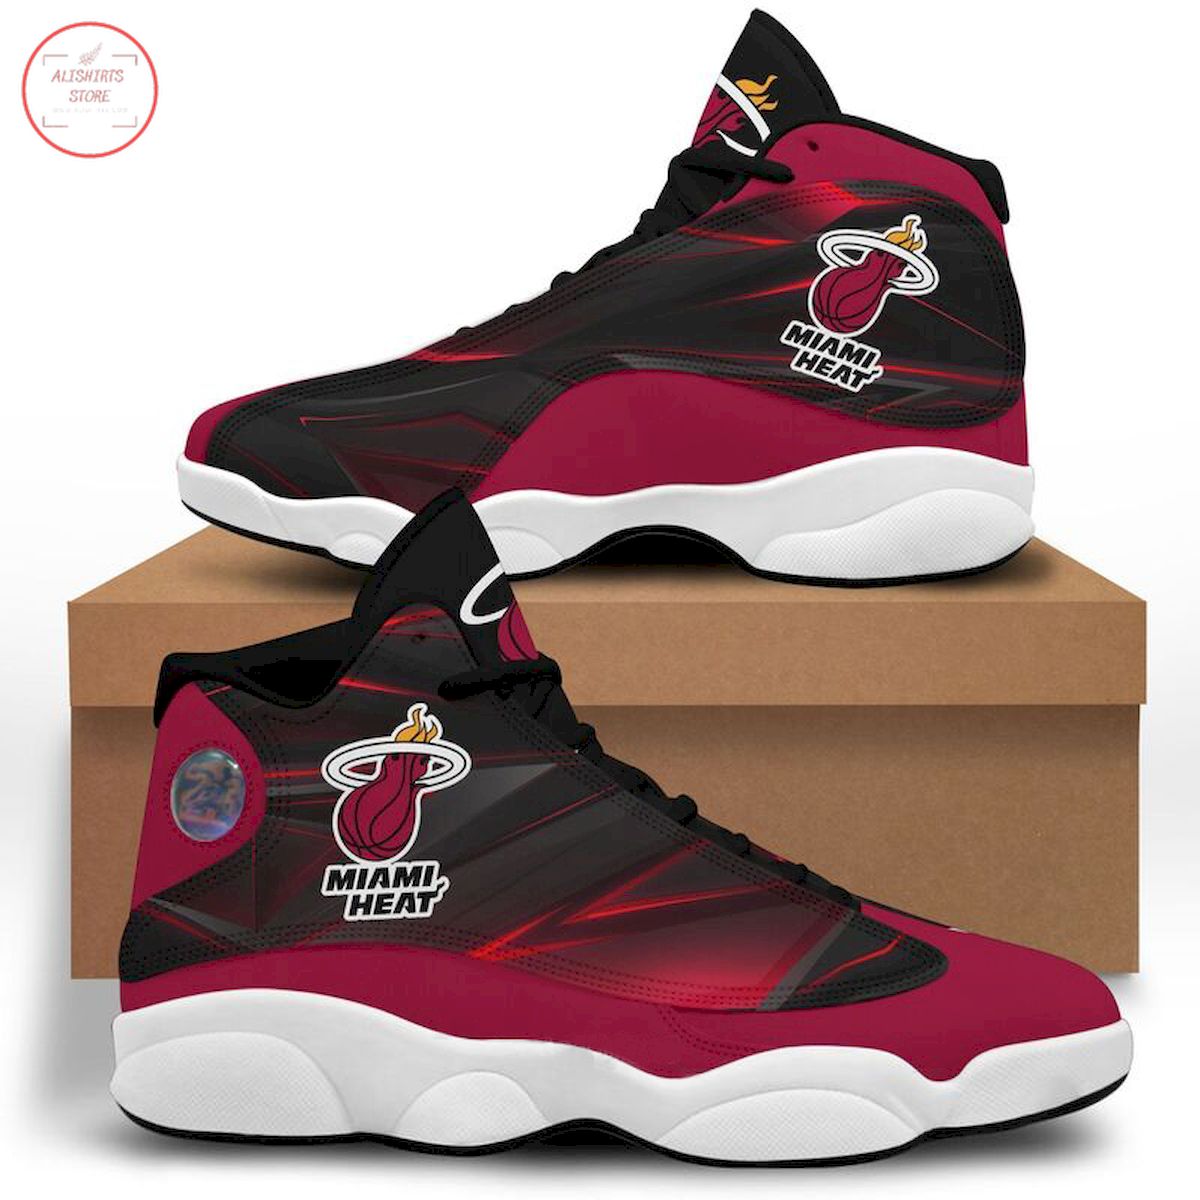 Miami Heat Air Jordan 13 Sneakers Shoes Basketball Team Sports